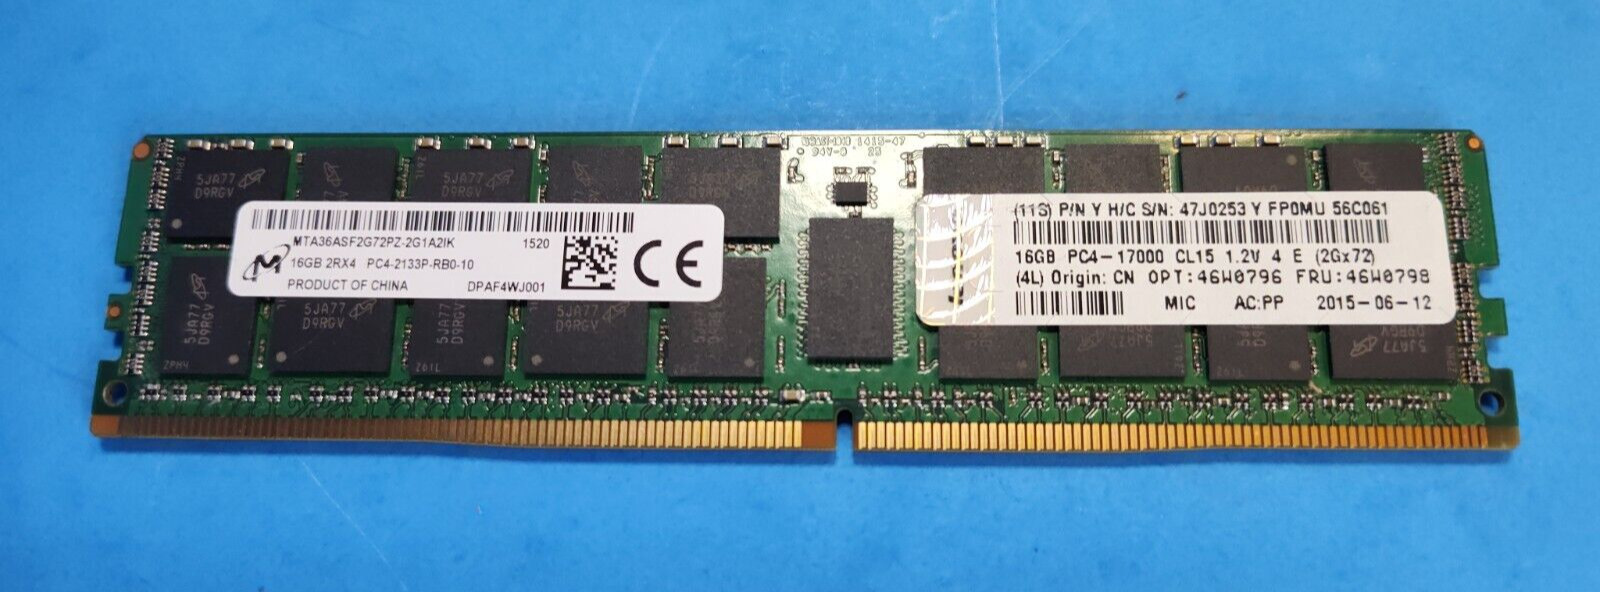 Micron 16GB 2Rx4 DDR4-2133P PC4-17000 CL15 1.2V Server RAM Memory Lenovo 46W0798